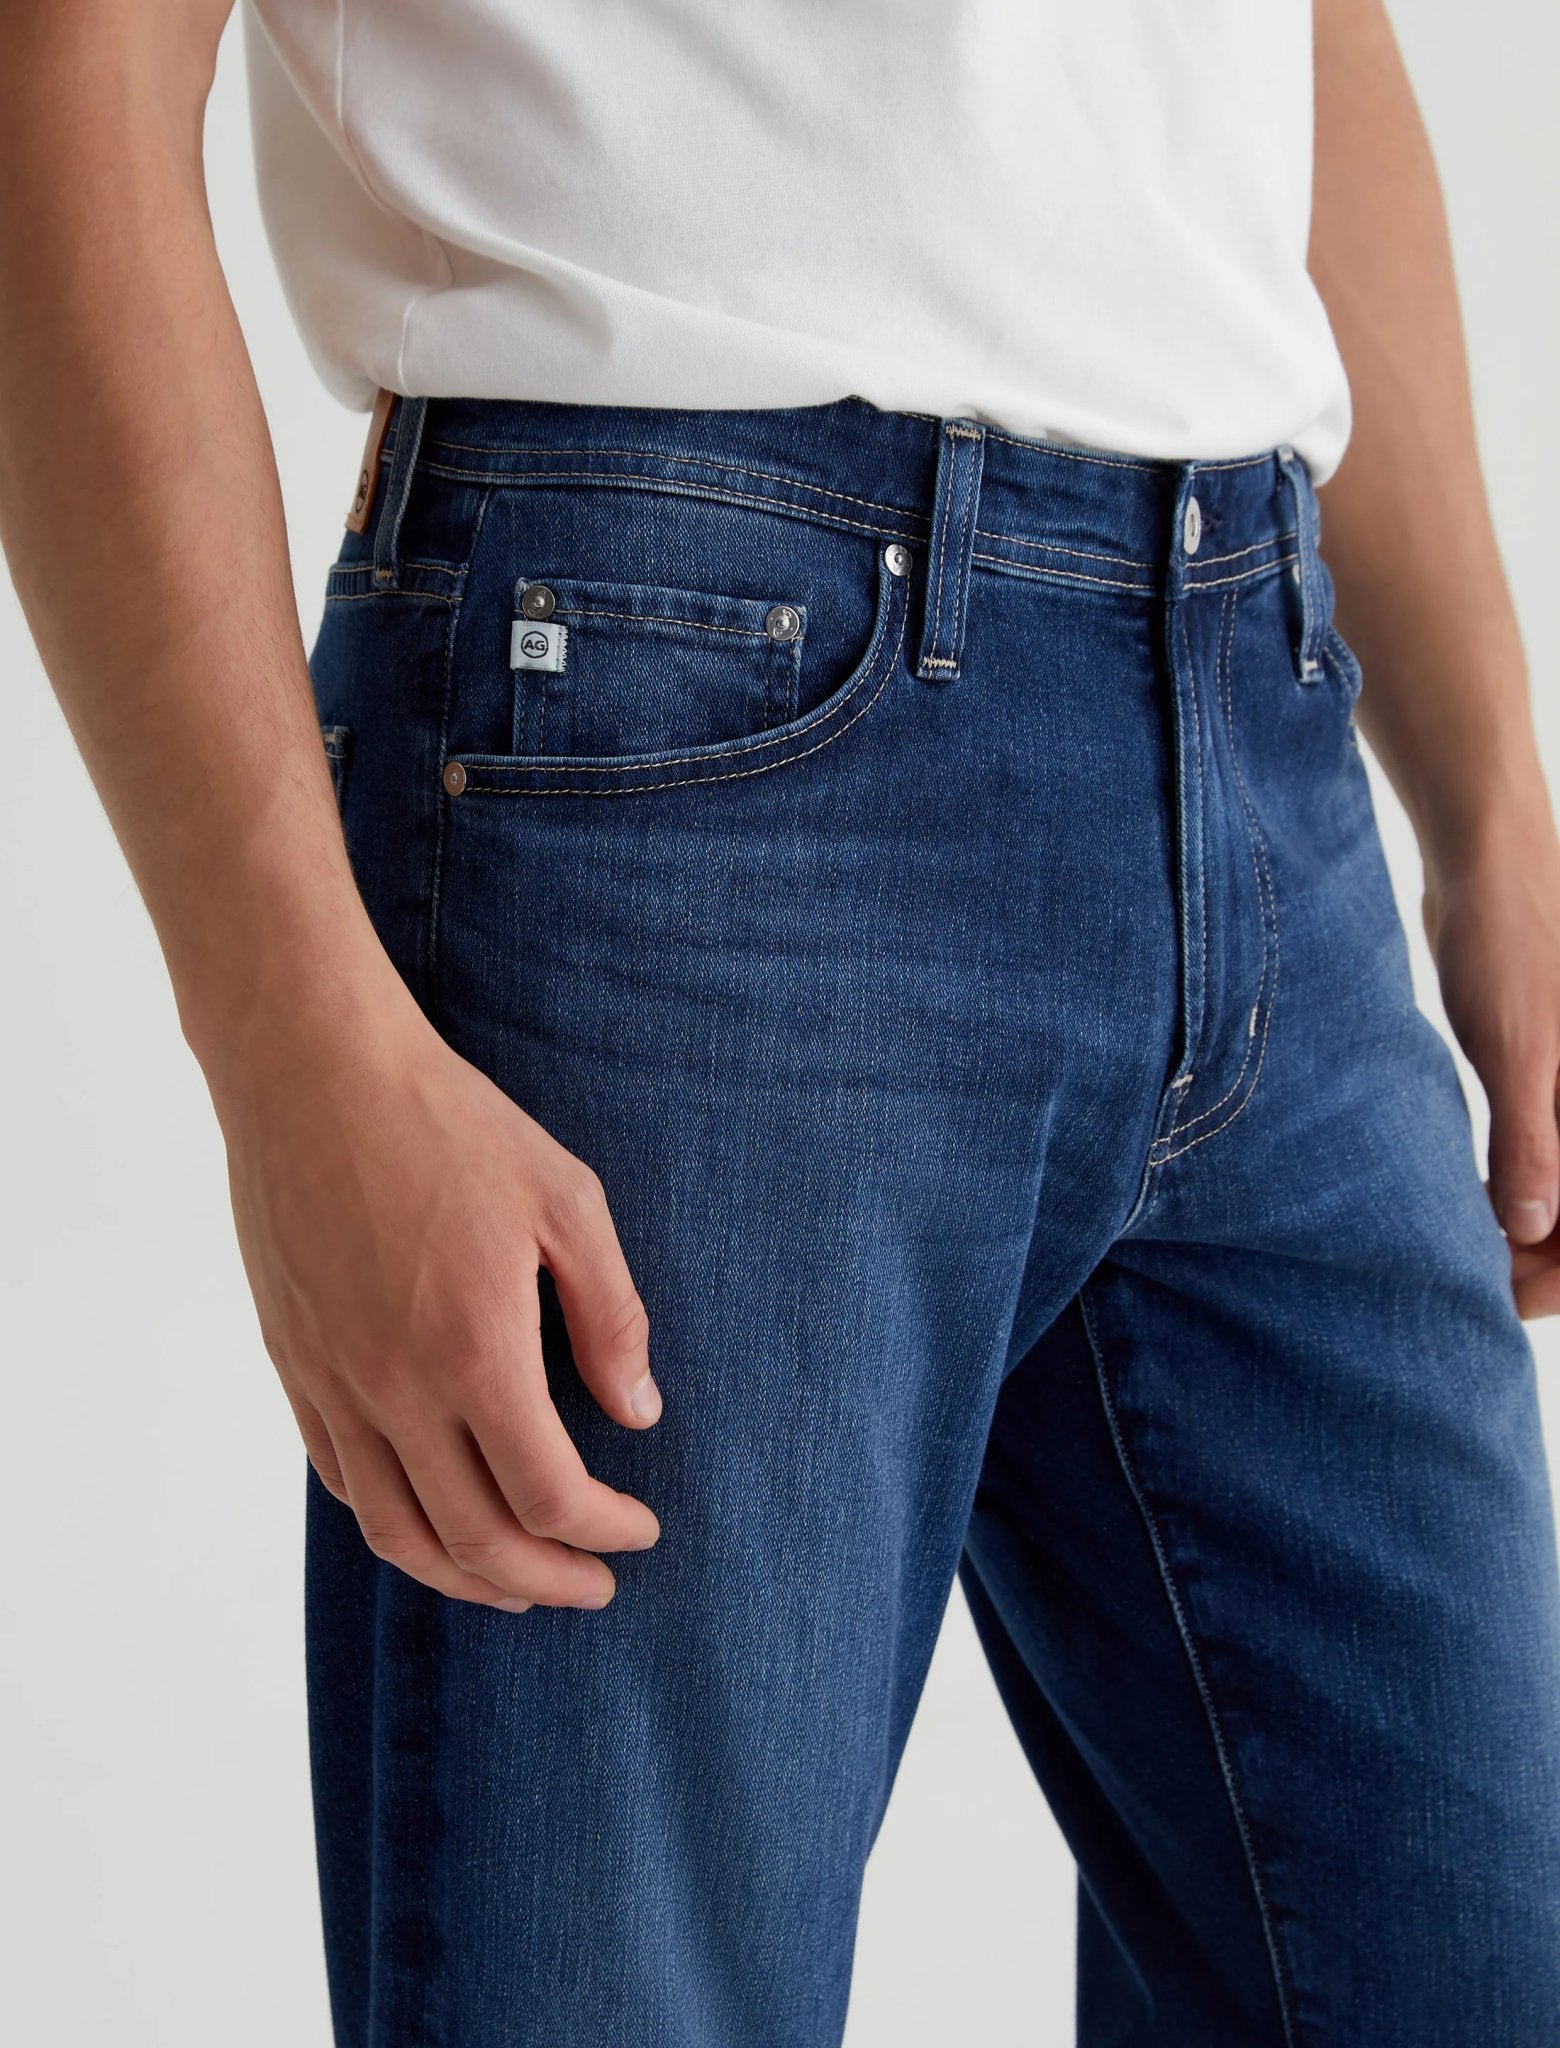 Everett Slim Straight Jeans - AG Jeans - Danali - 1794HYI-CWAY-31